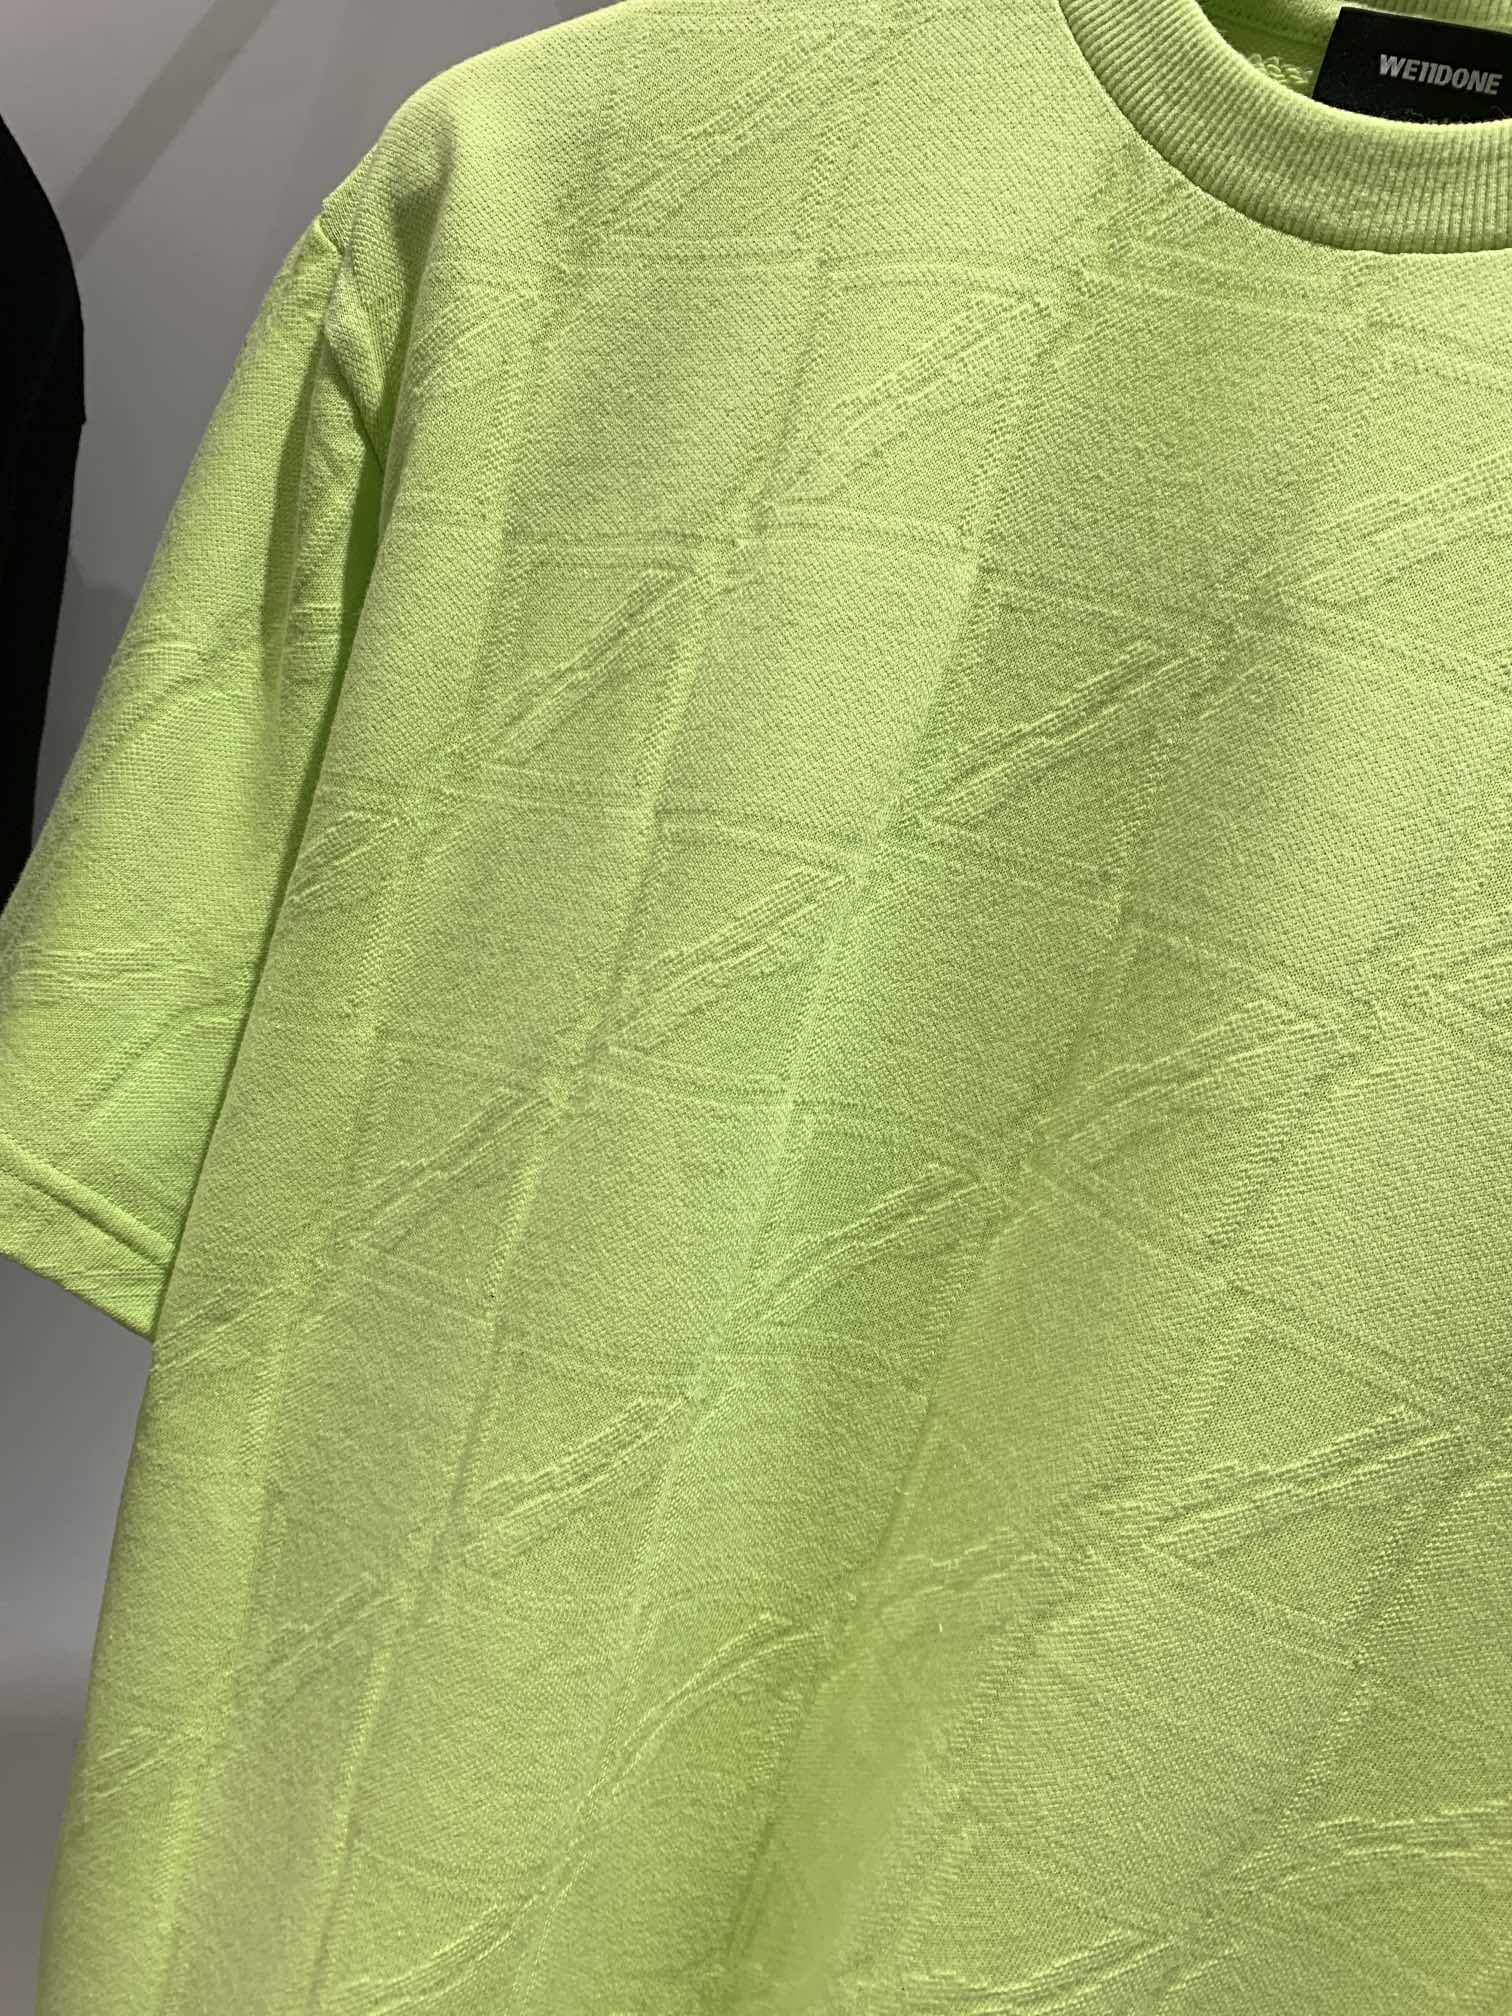 WE11DONE ウェルカムヘル tシャツｎ級品 最安値人気 純綿トップス 人気新作 短袖Tシャツ 2色可選 グリーン_2